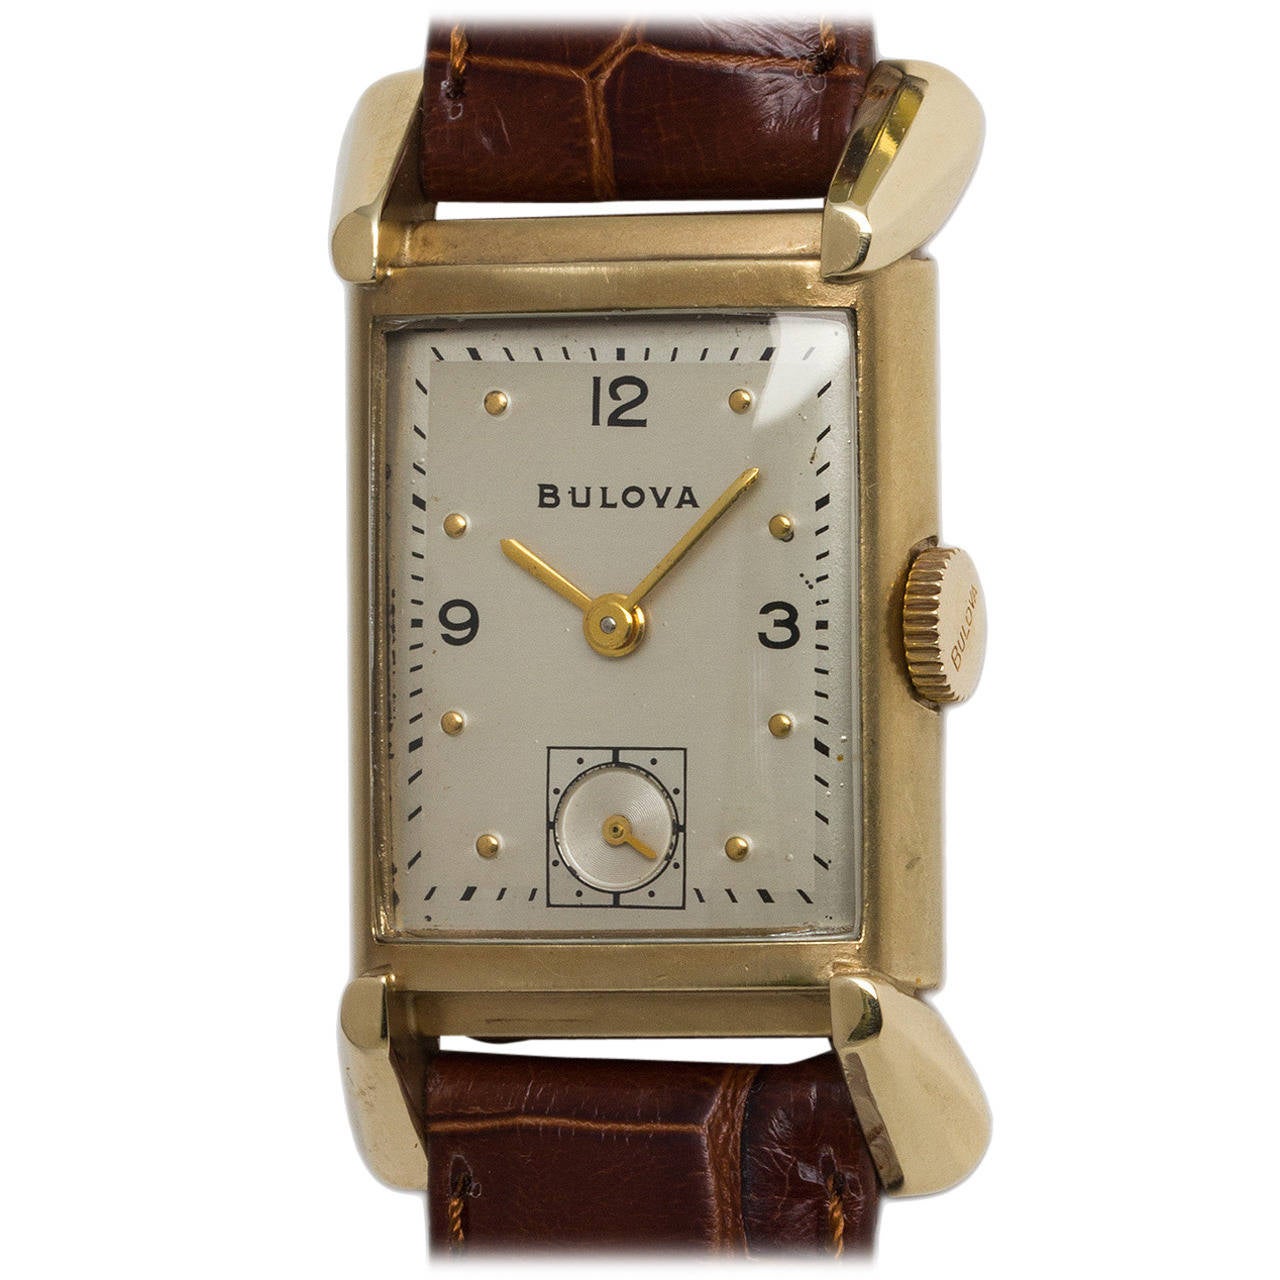 1950 Bulova Watch Models - For Sale on 1stDibs